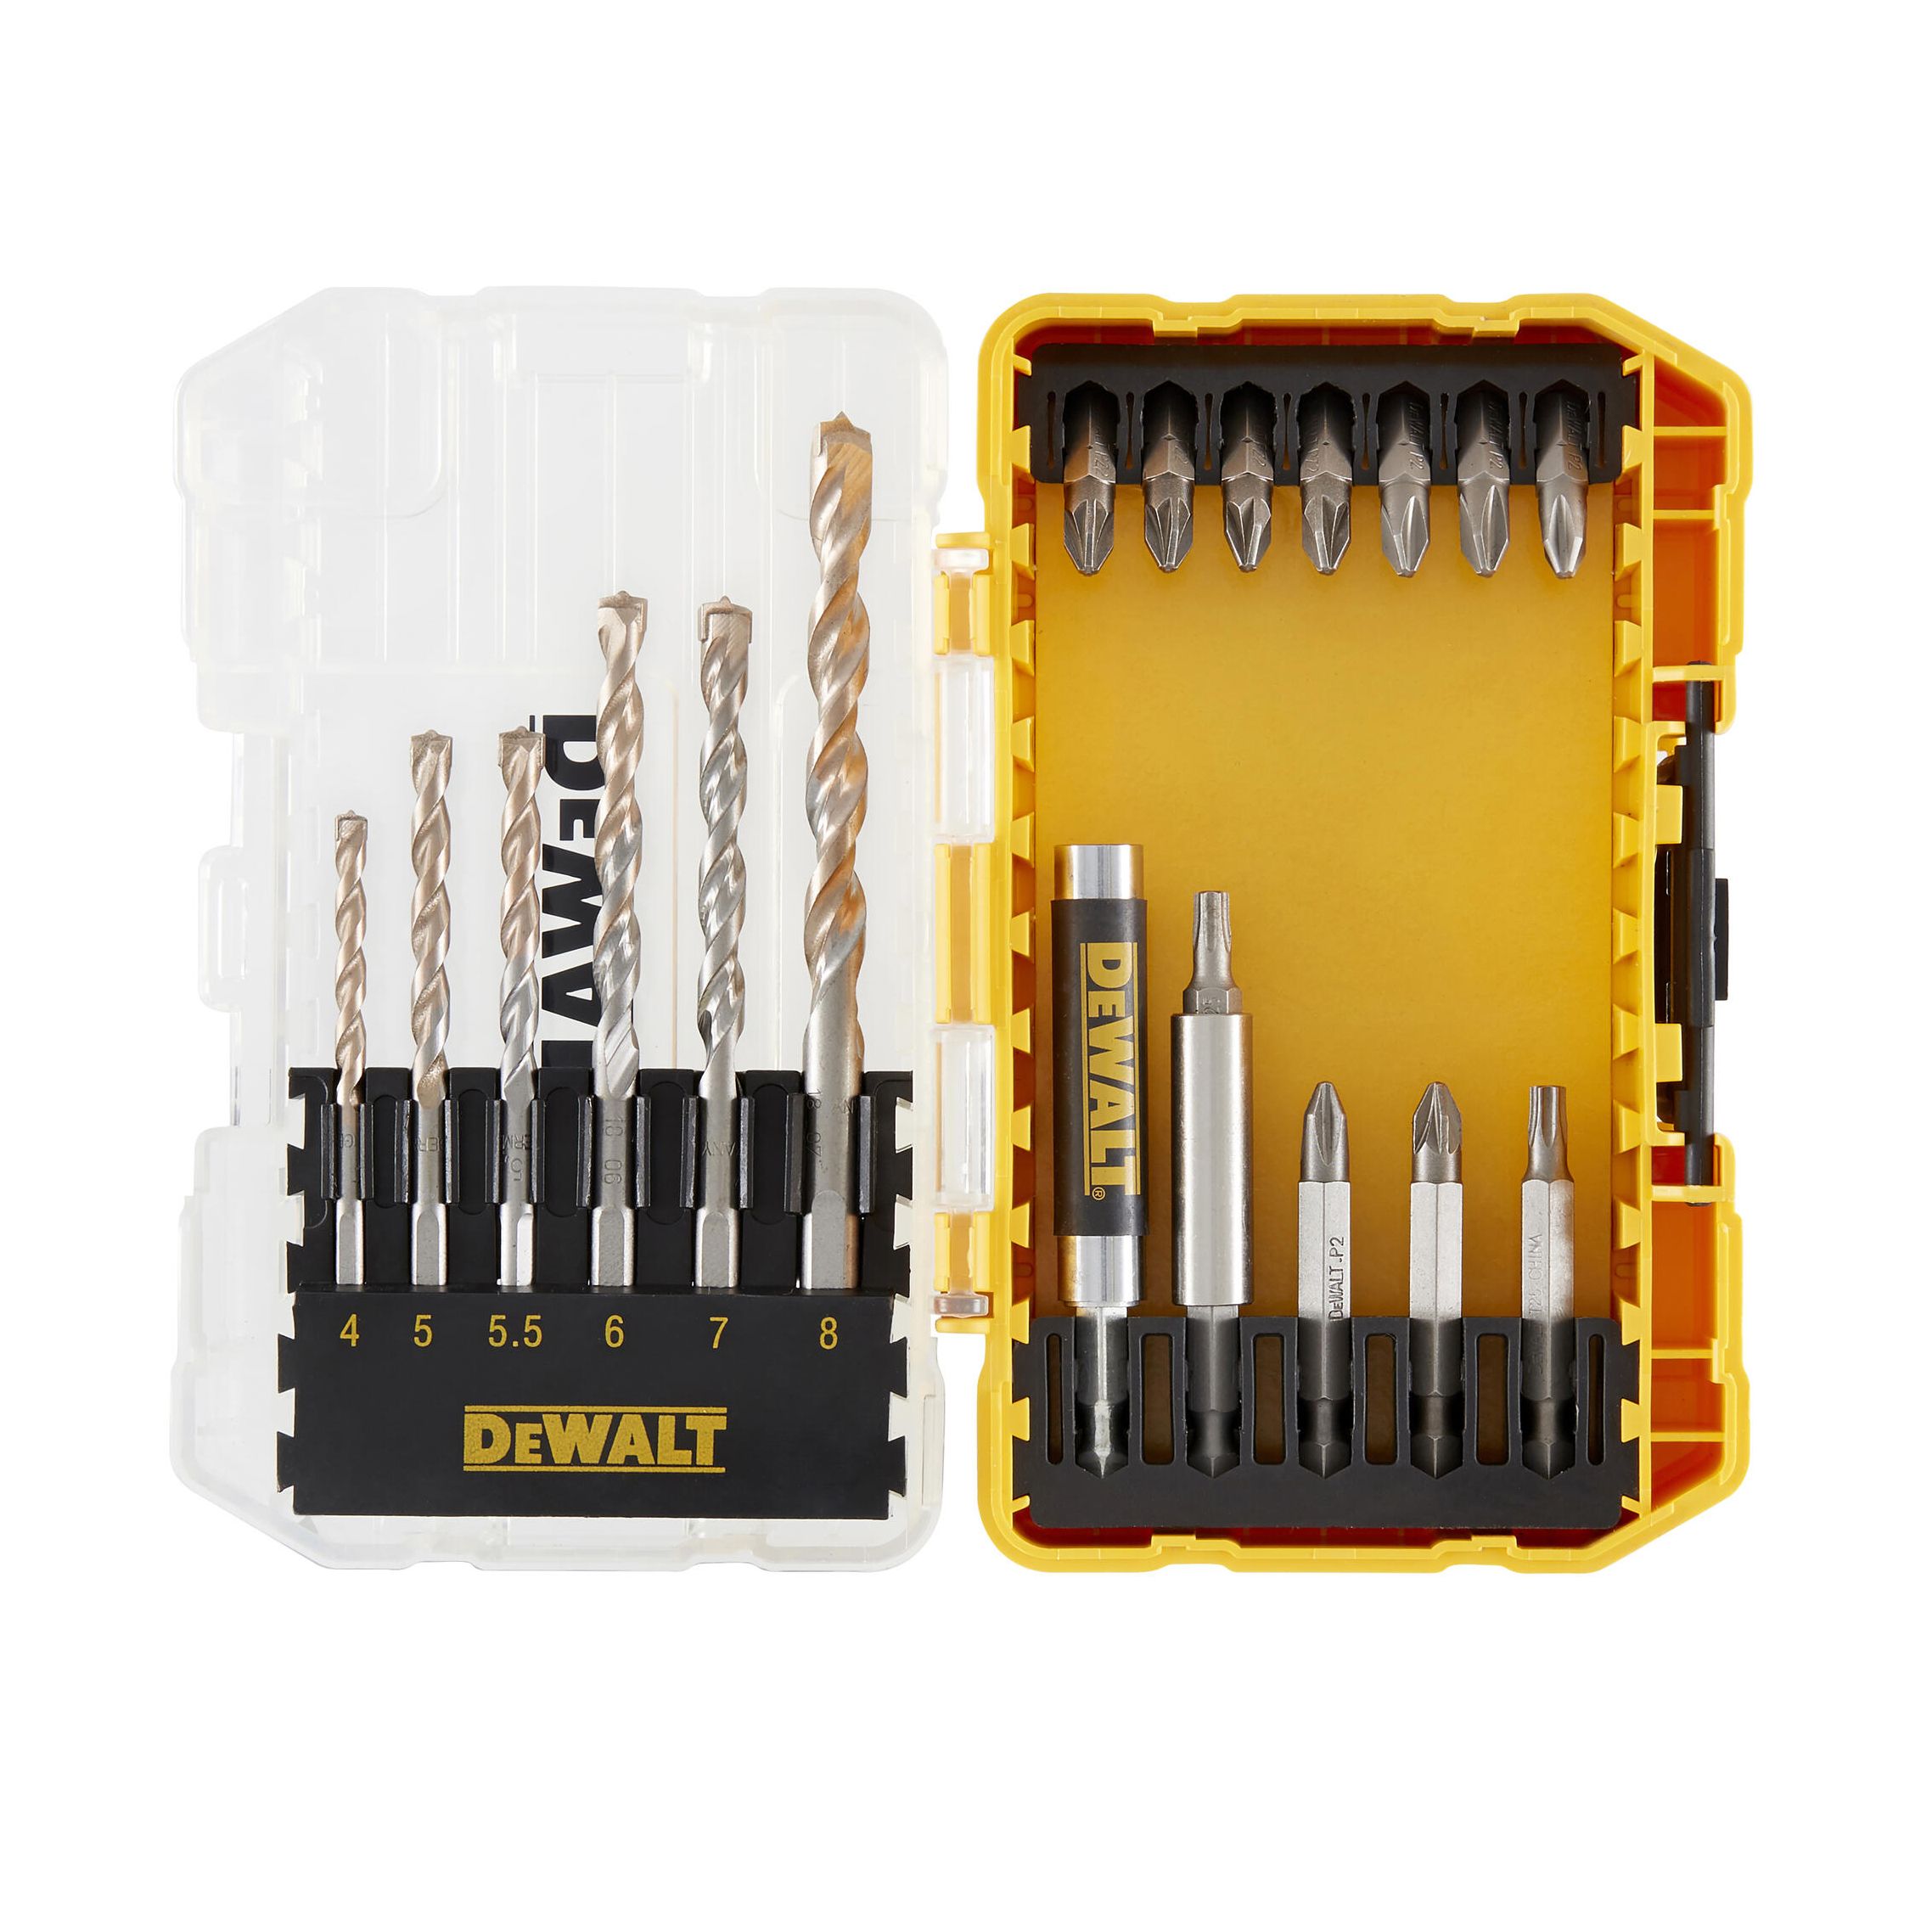 DeWalt Mixed Set 19 piece Straight Masonry Drill & screwdriver bit set